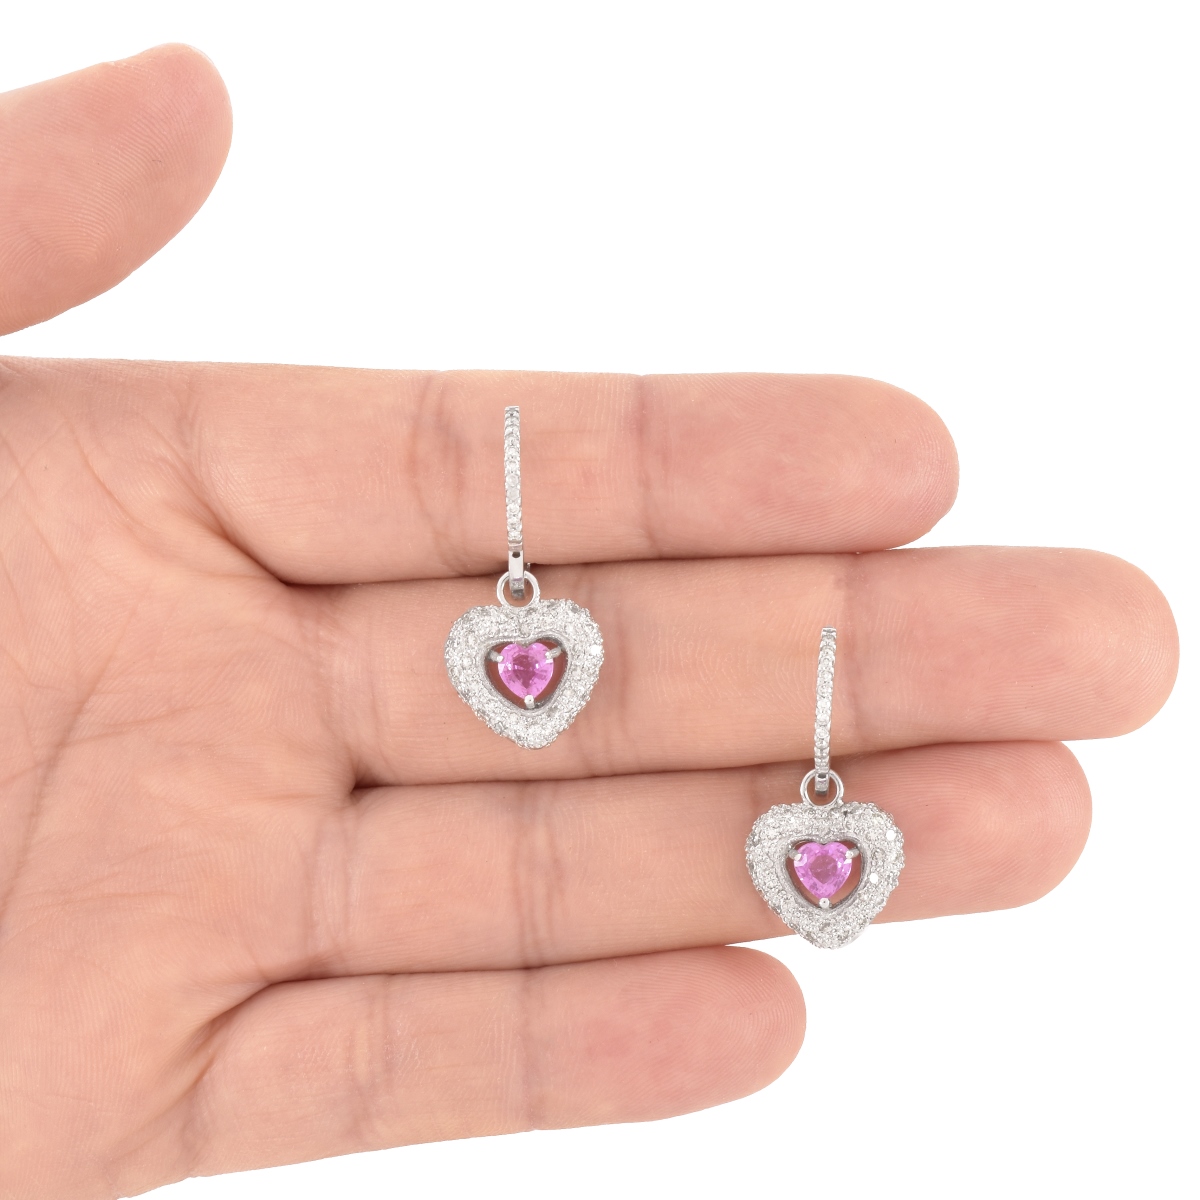 Diamond, Pink Sapphire and 18K Earrings